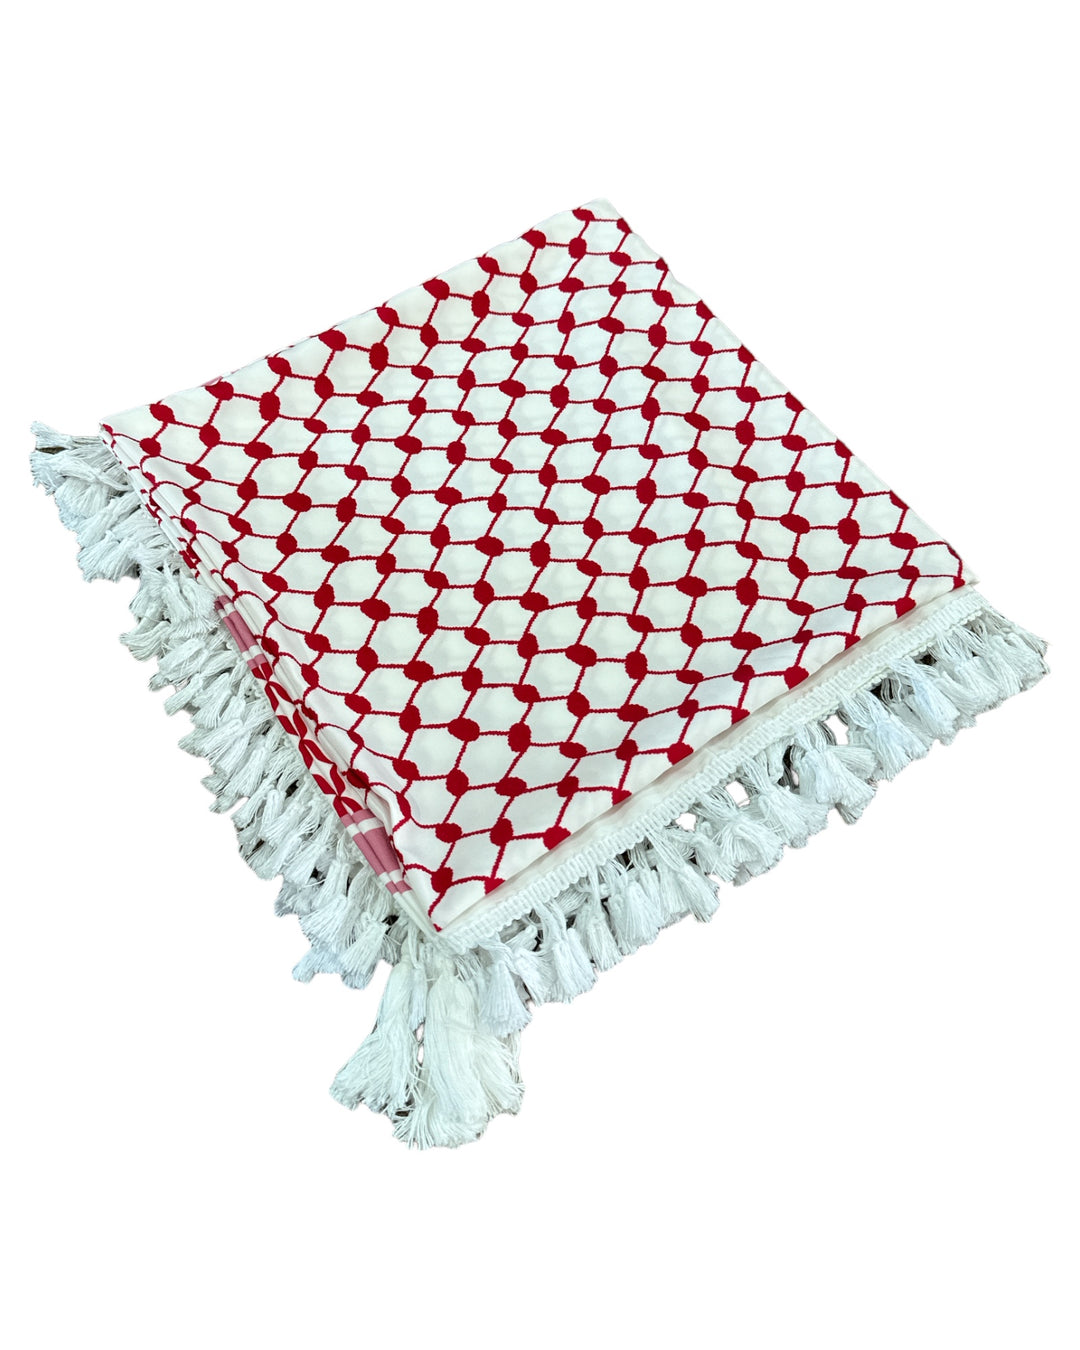 Elegant Palestine Keffiyeh - Red & White with Braids (Polyester)